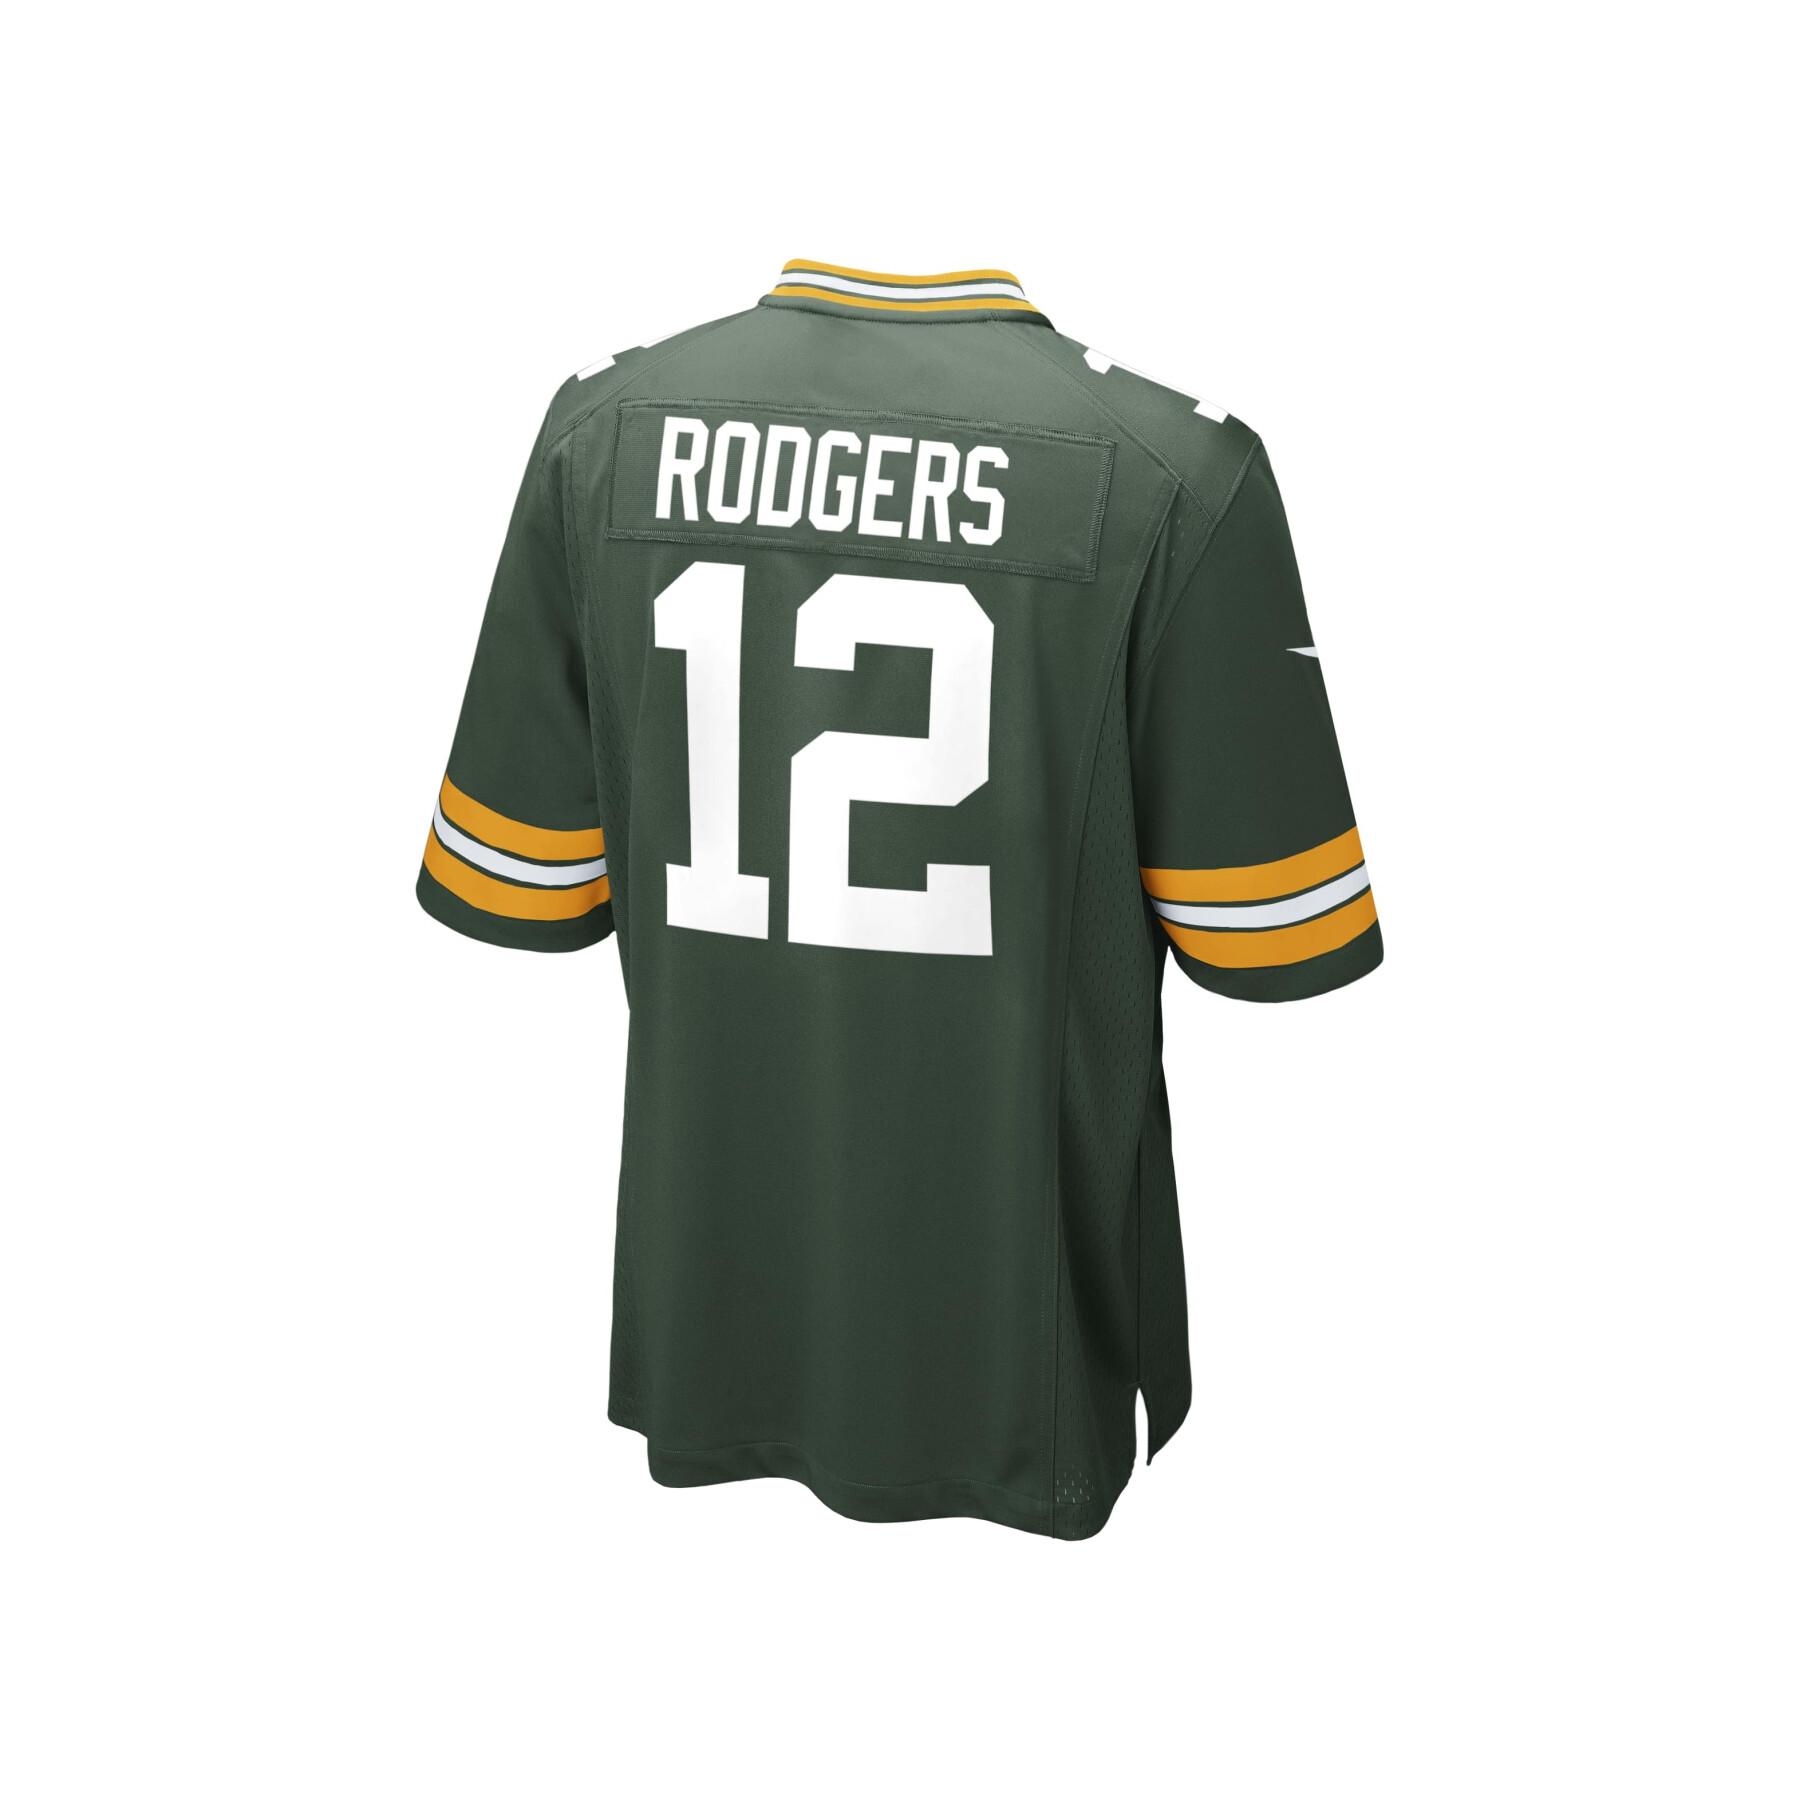 Camiseta "Aaron Rodgers" de los Green Bay Packers temporada 2021/22